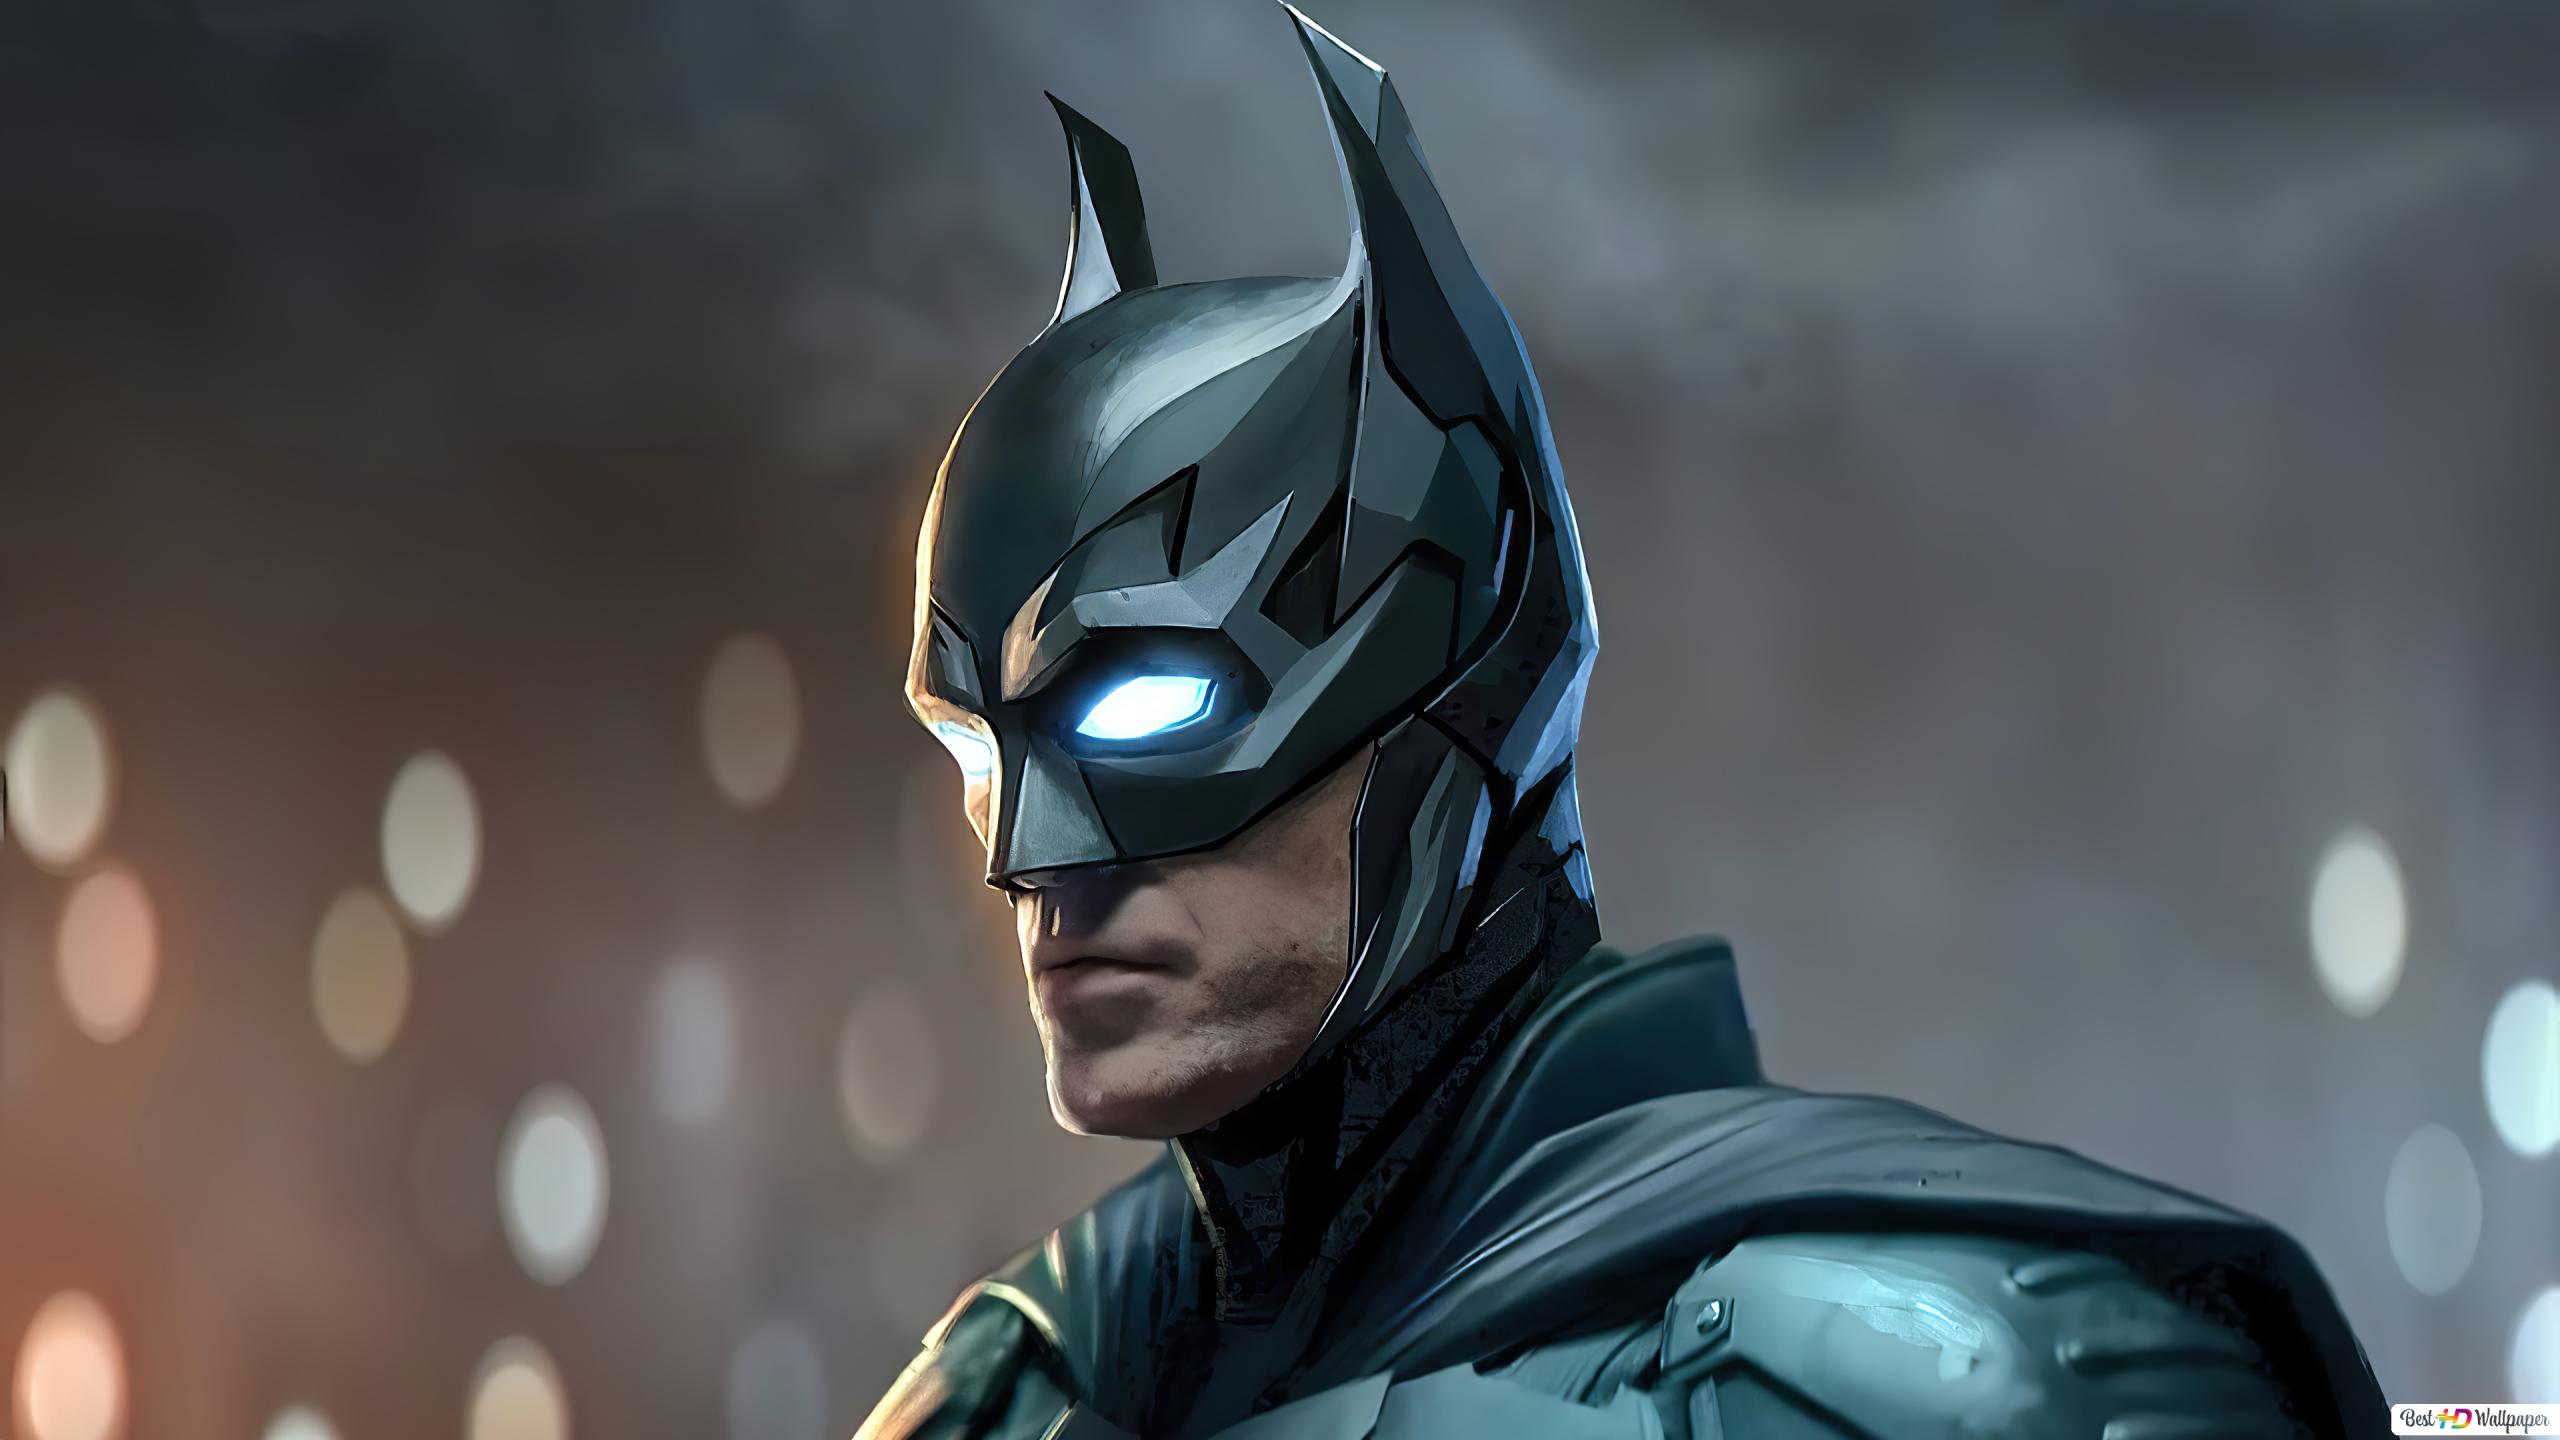 The Batman 2021 Movie [Robert Pattinson as Batman] HD wallpaper download